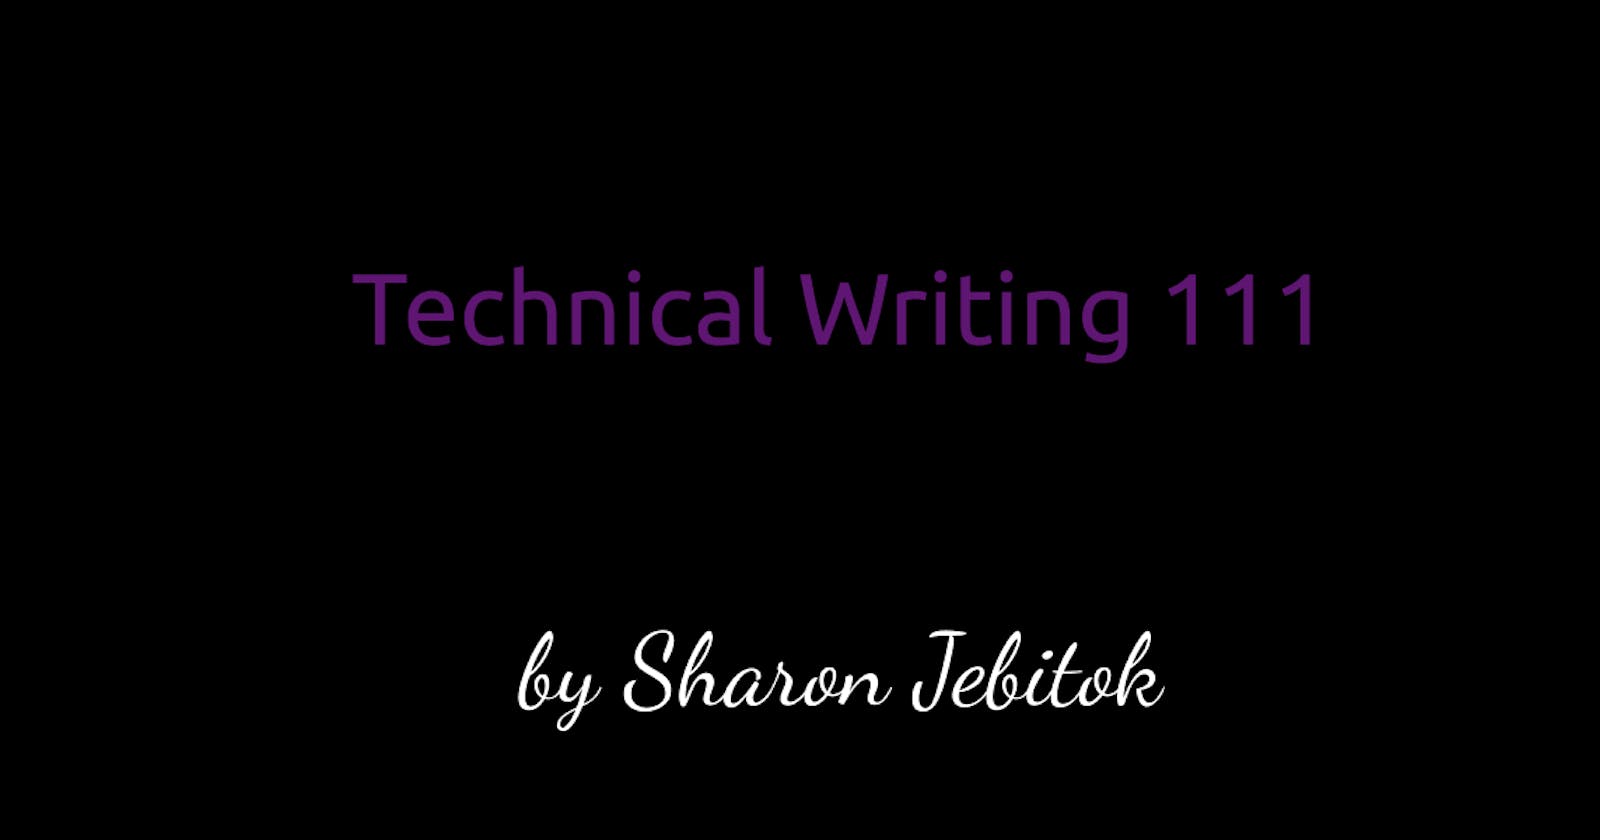 Technical Writing 111